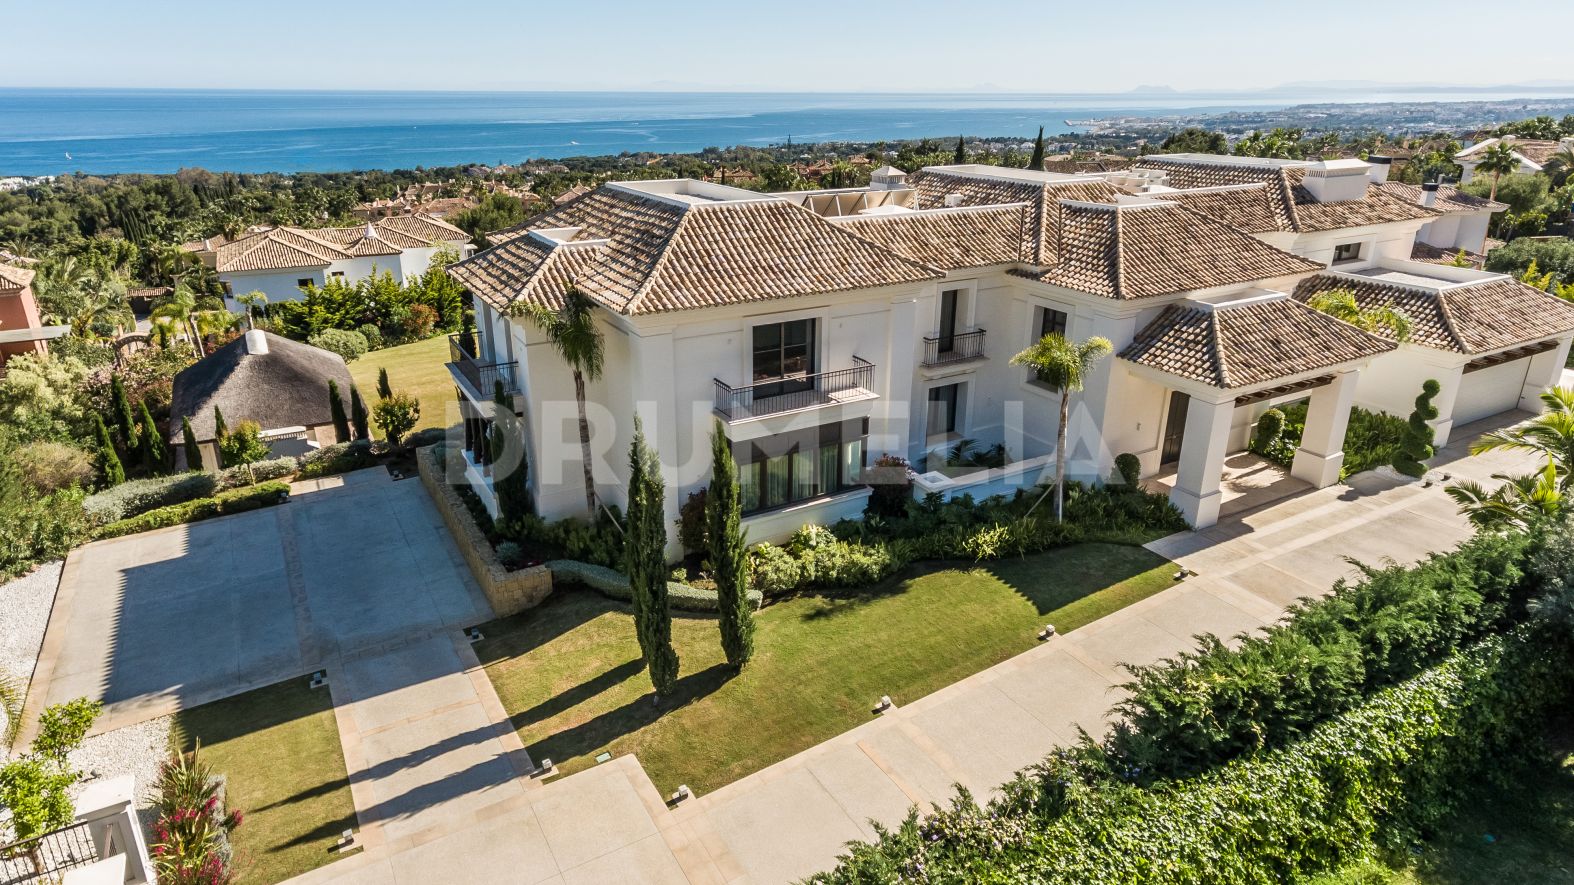 New Stylish Luxury Modern Mediterranean Villa, Sierra Blanca, Marbella